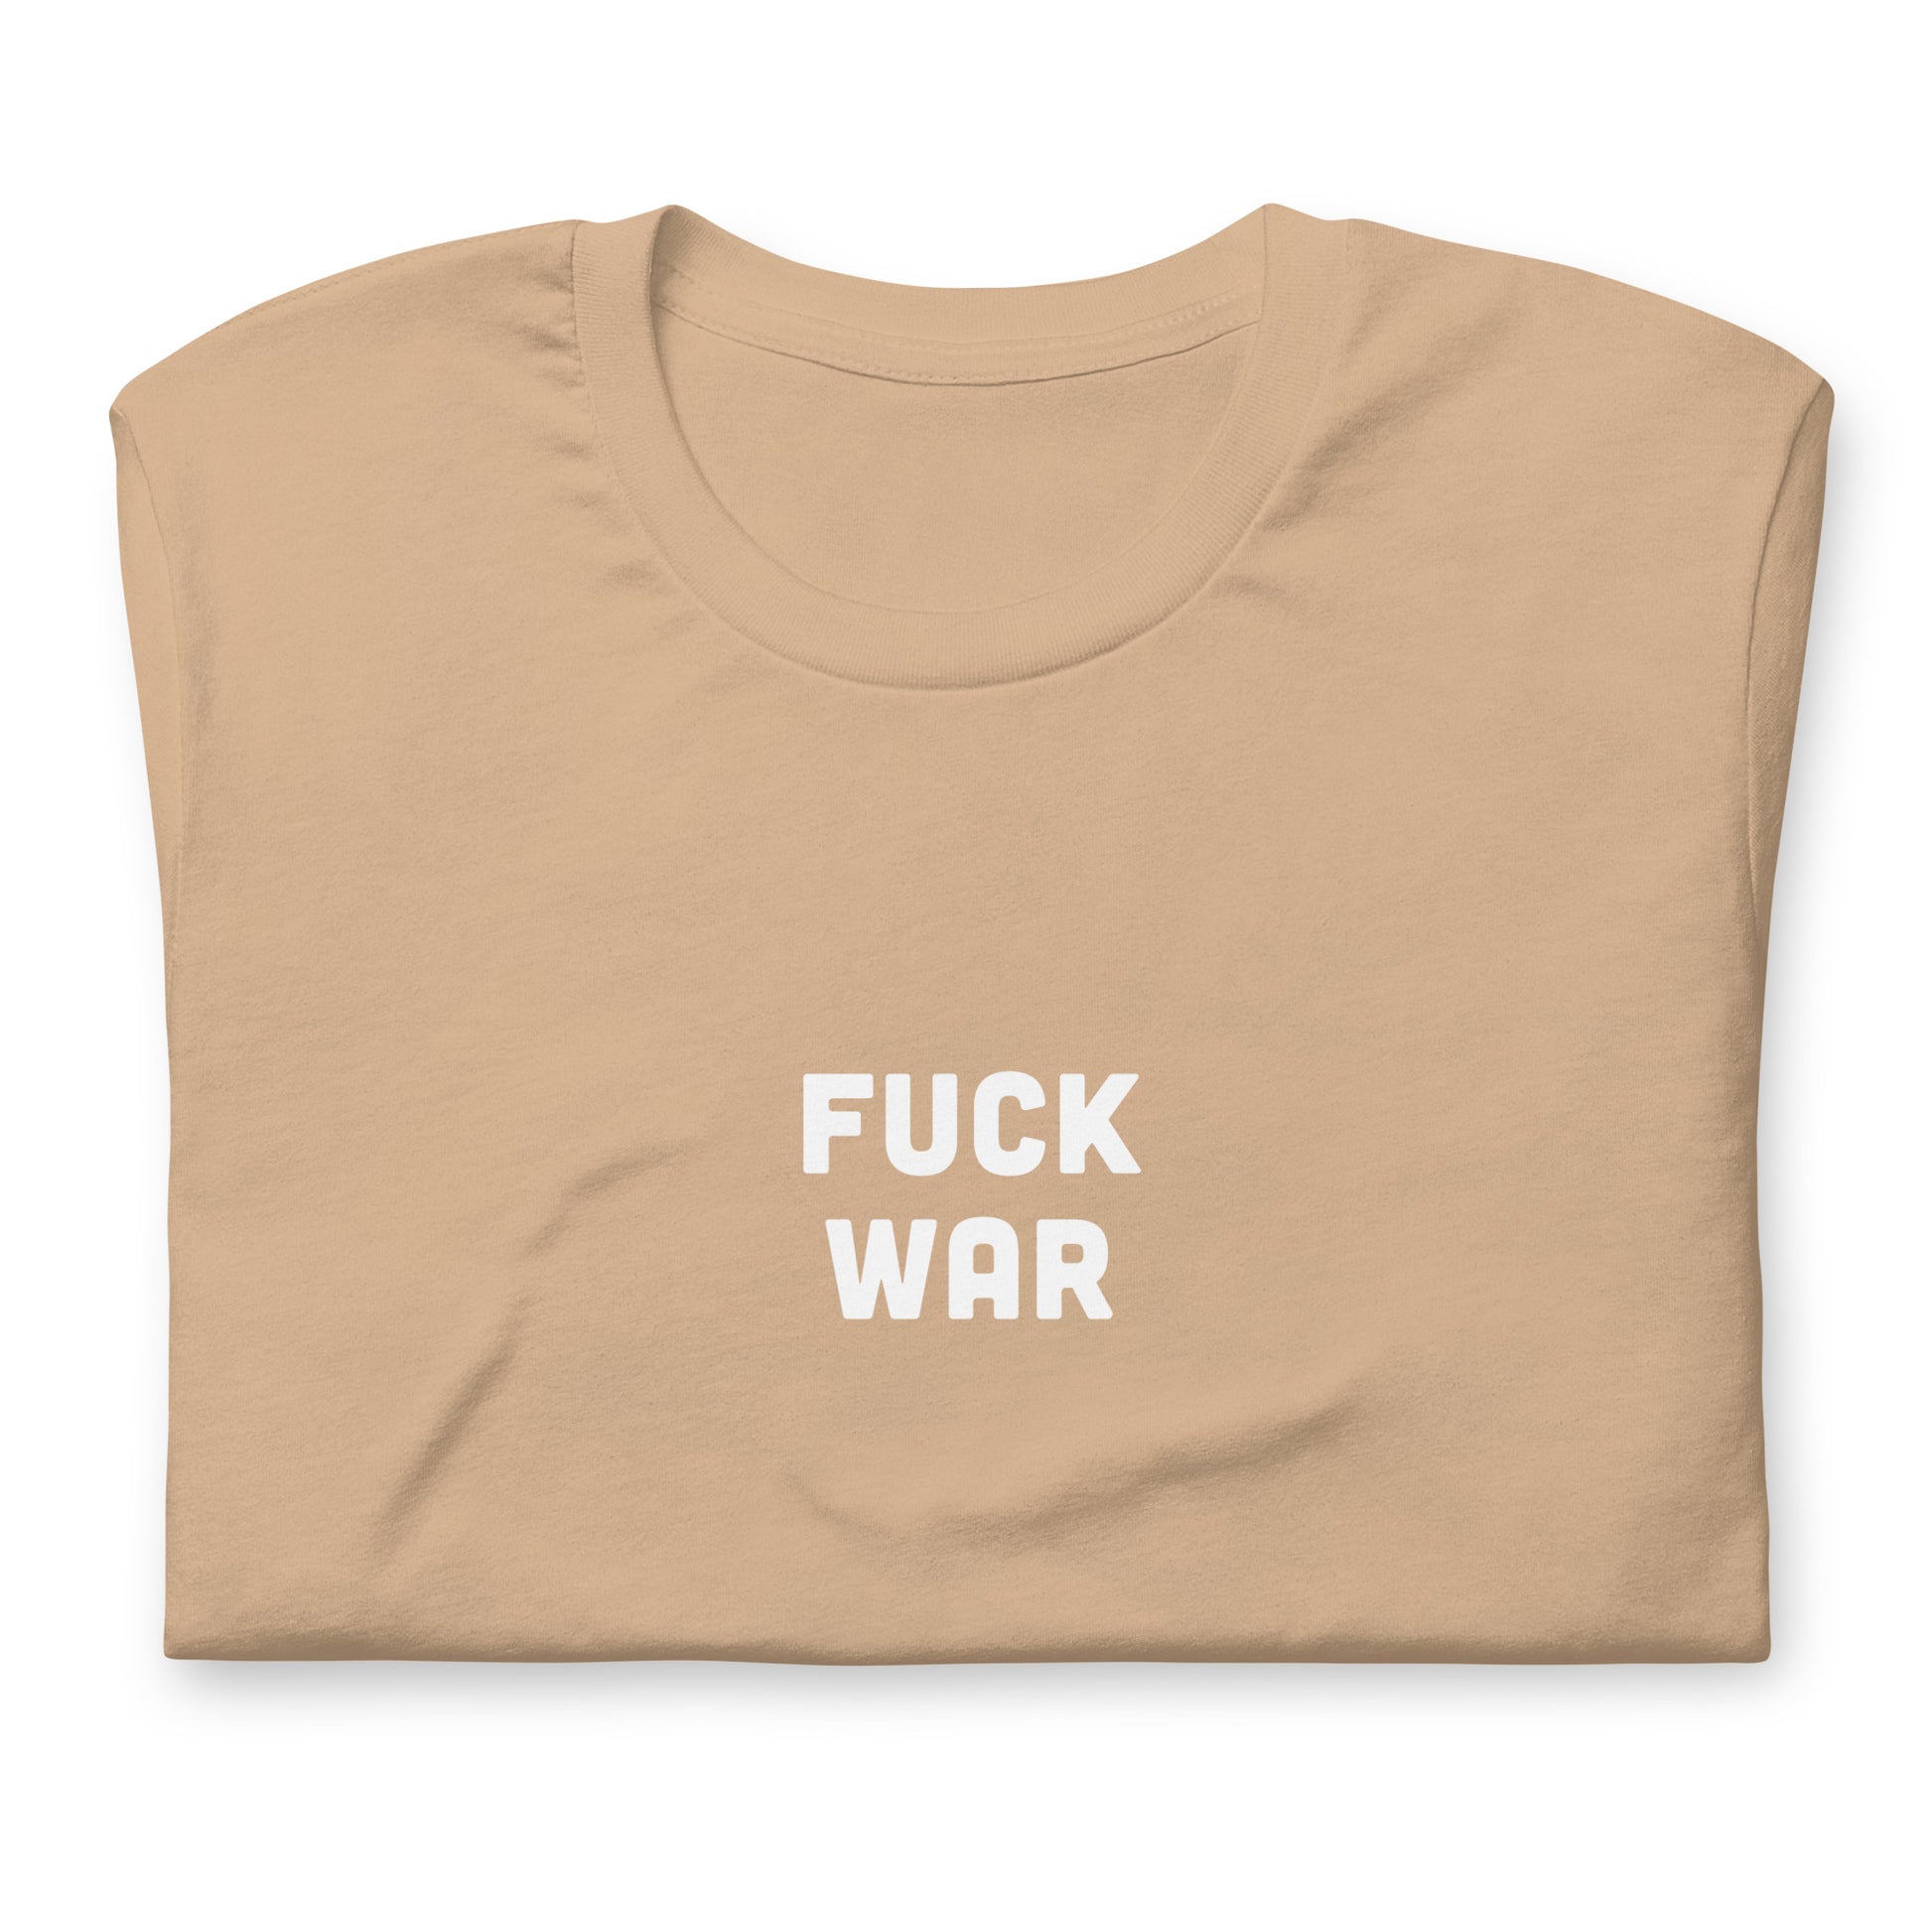 Fuck War T-Shirt Size XL Color Forest